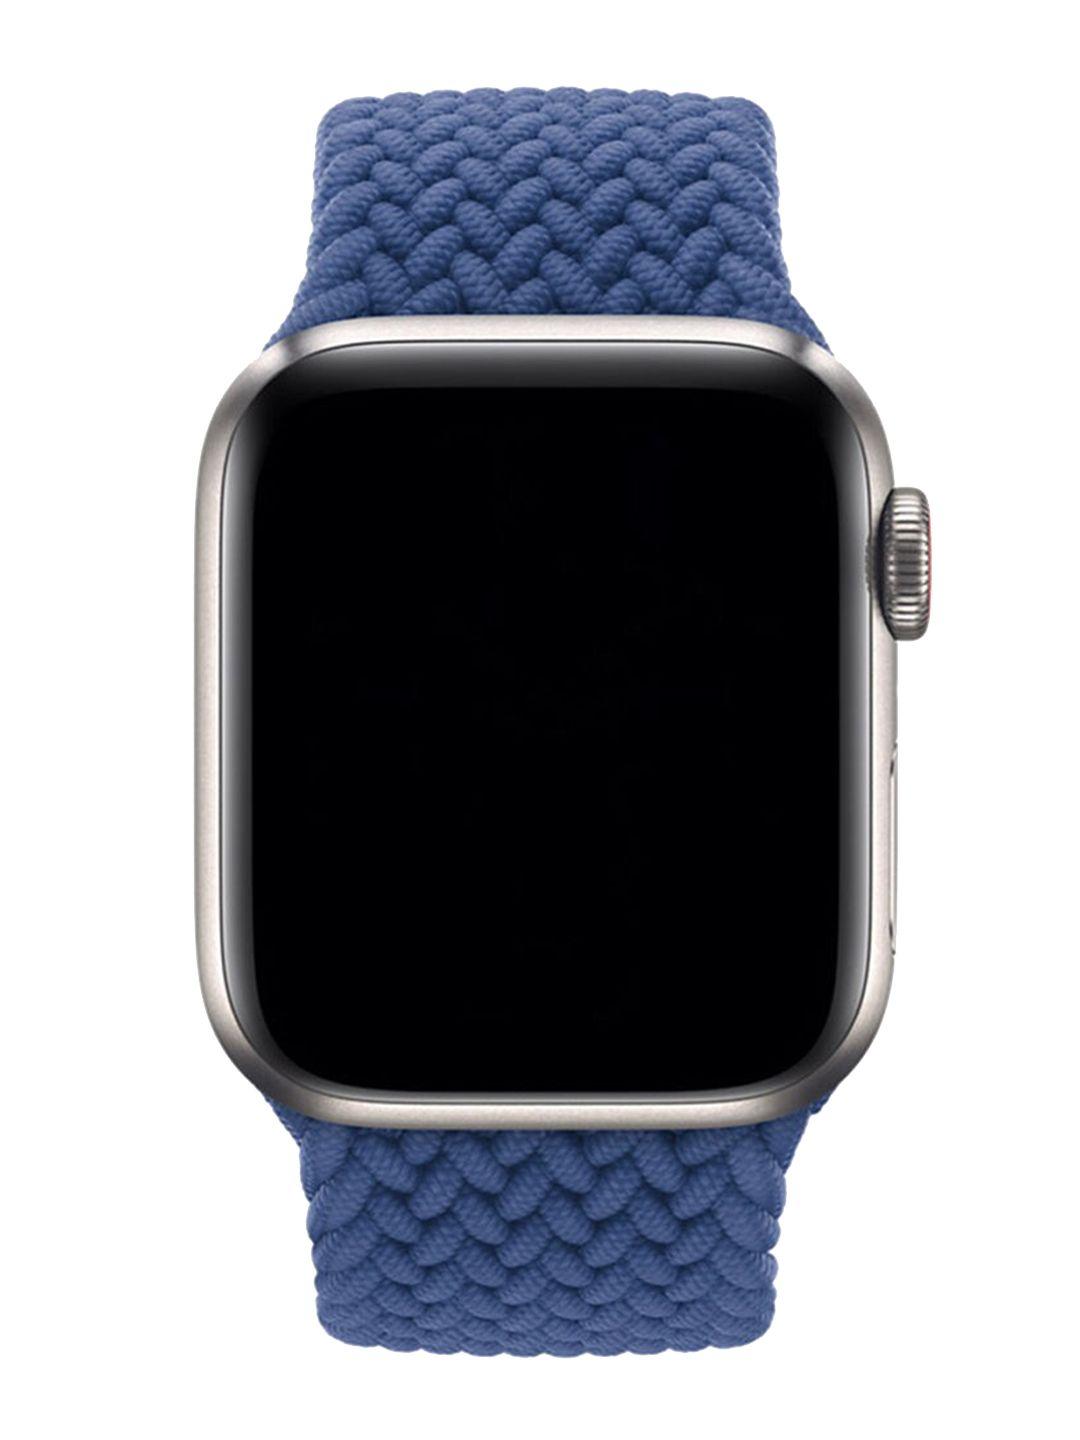 macmerise blue braided apple watch strap